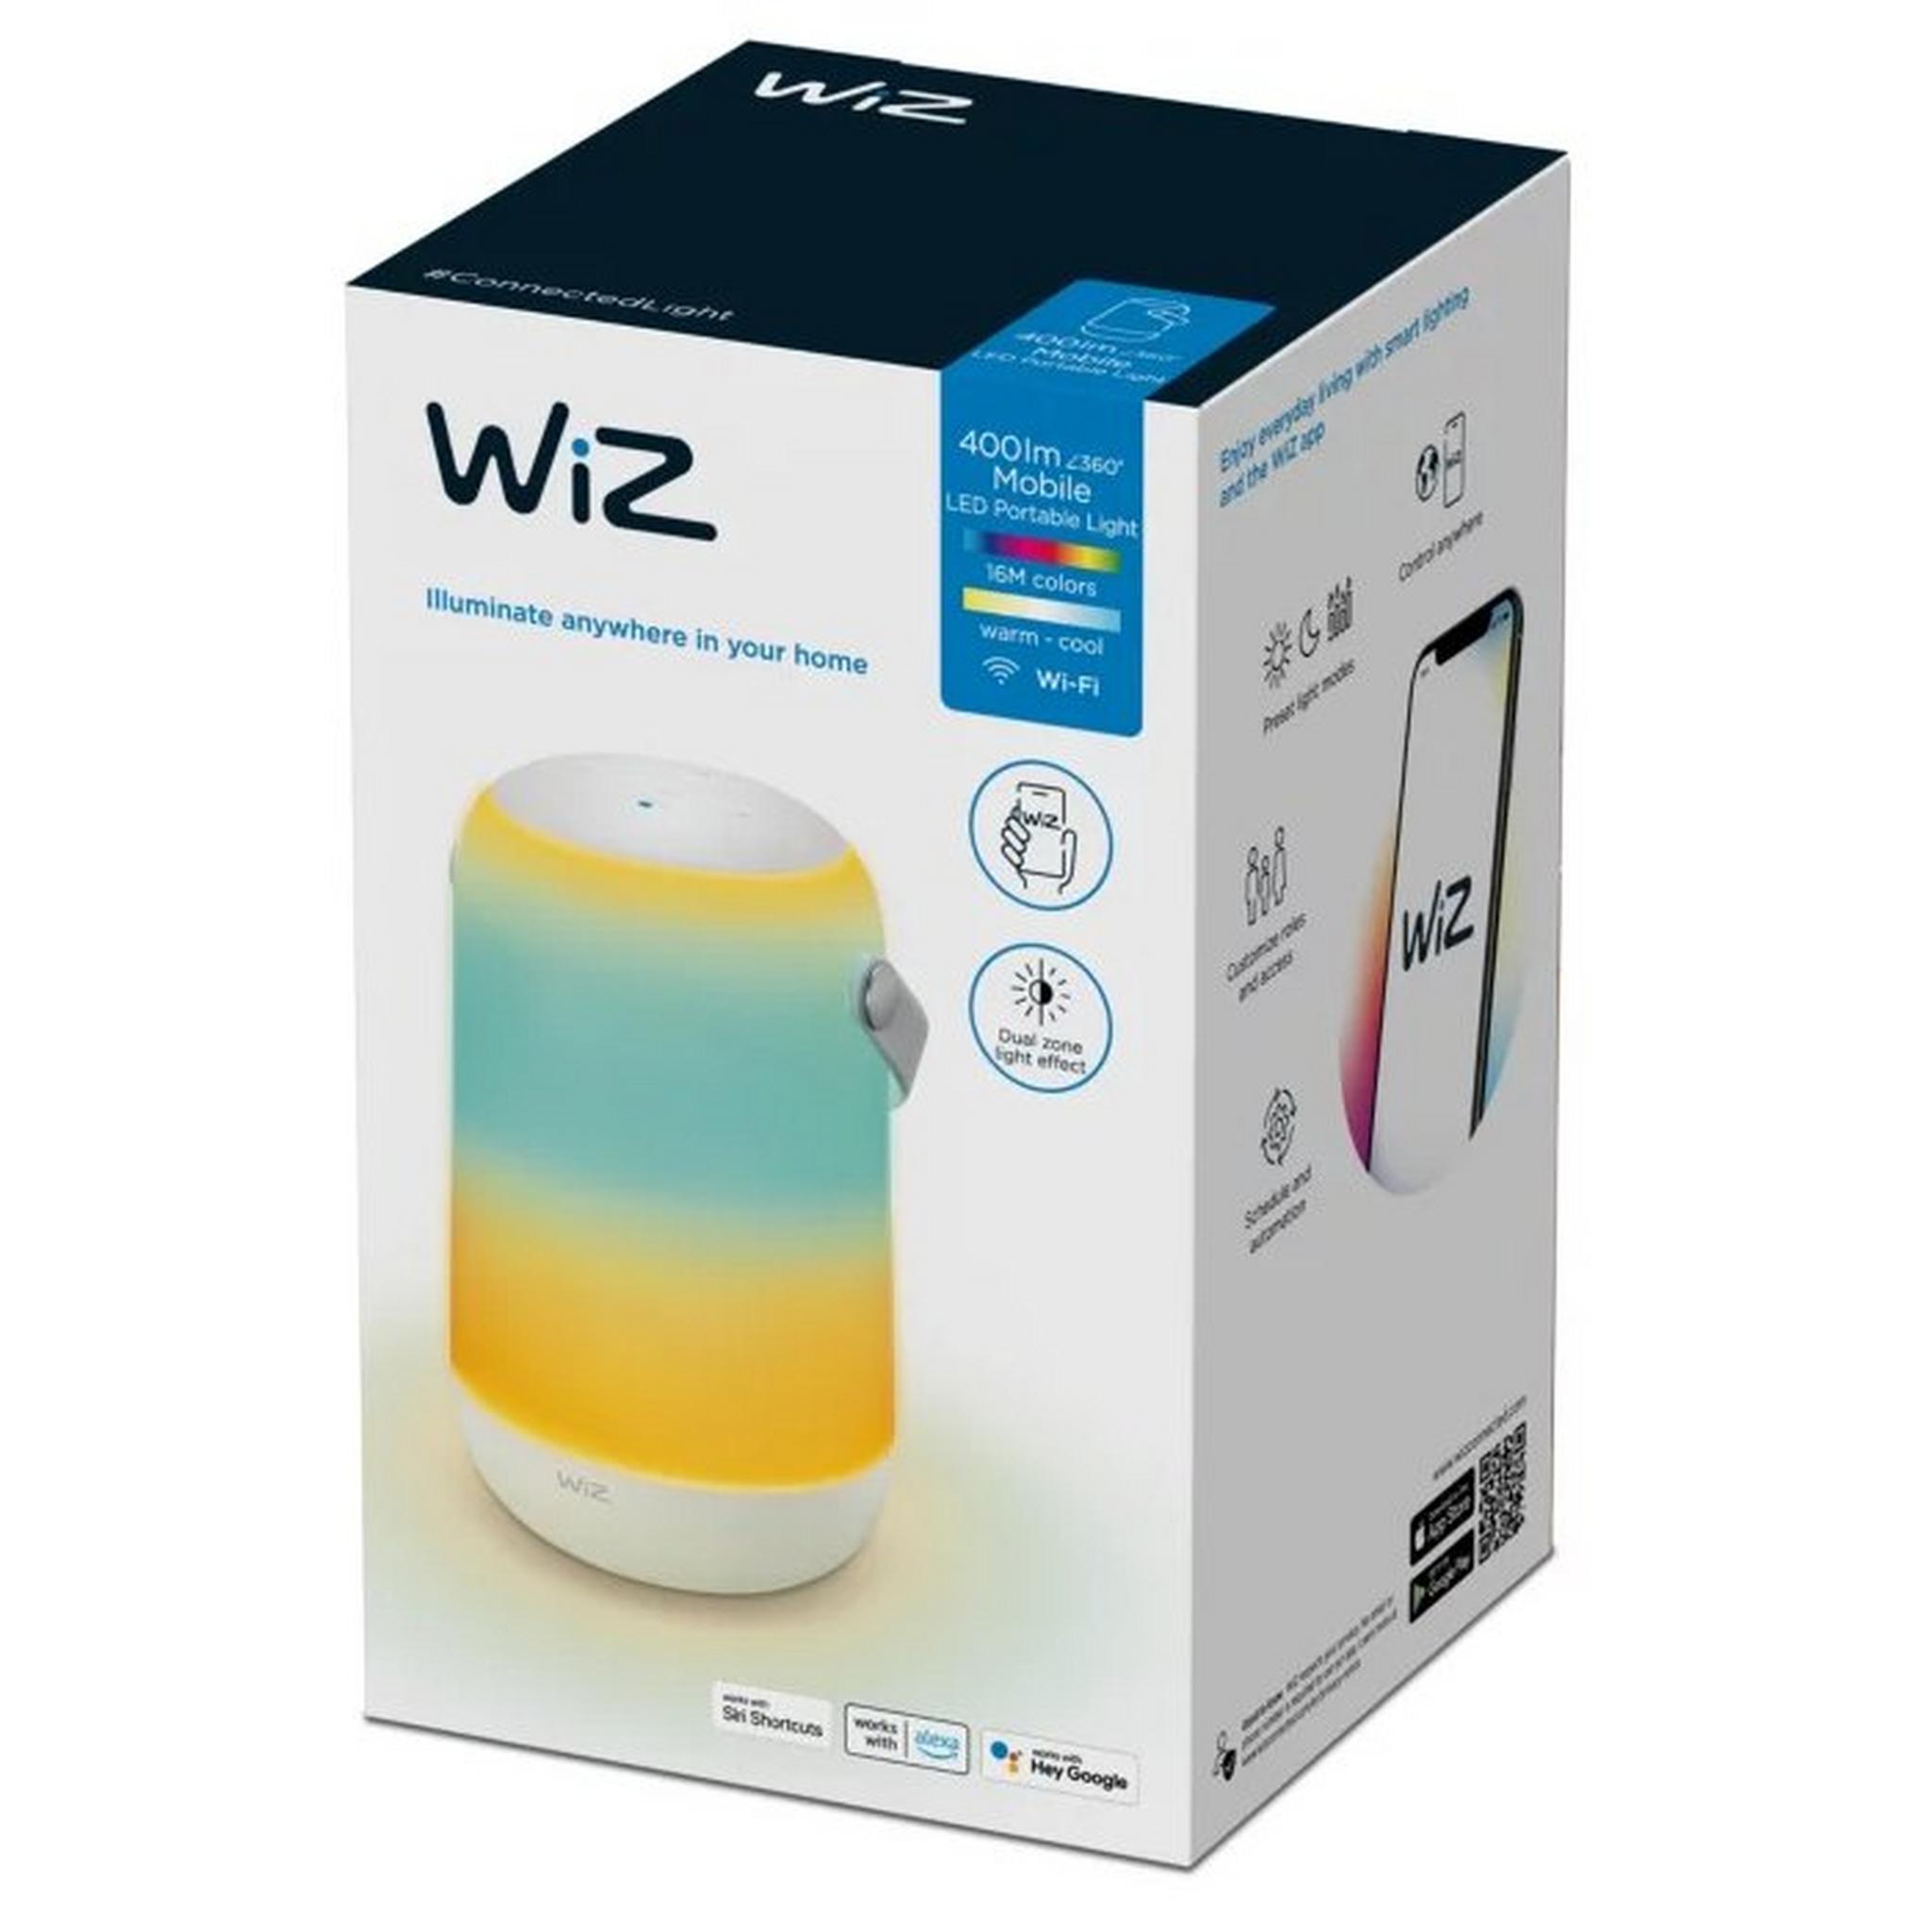 Philips Wiz Portable Wireless Light, 929003211501 – White